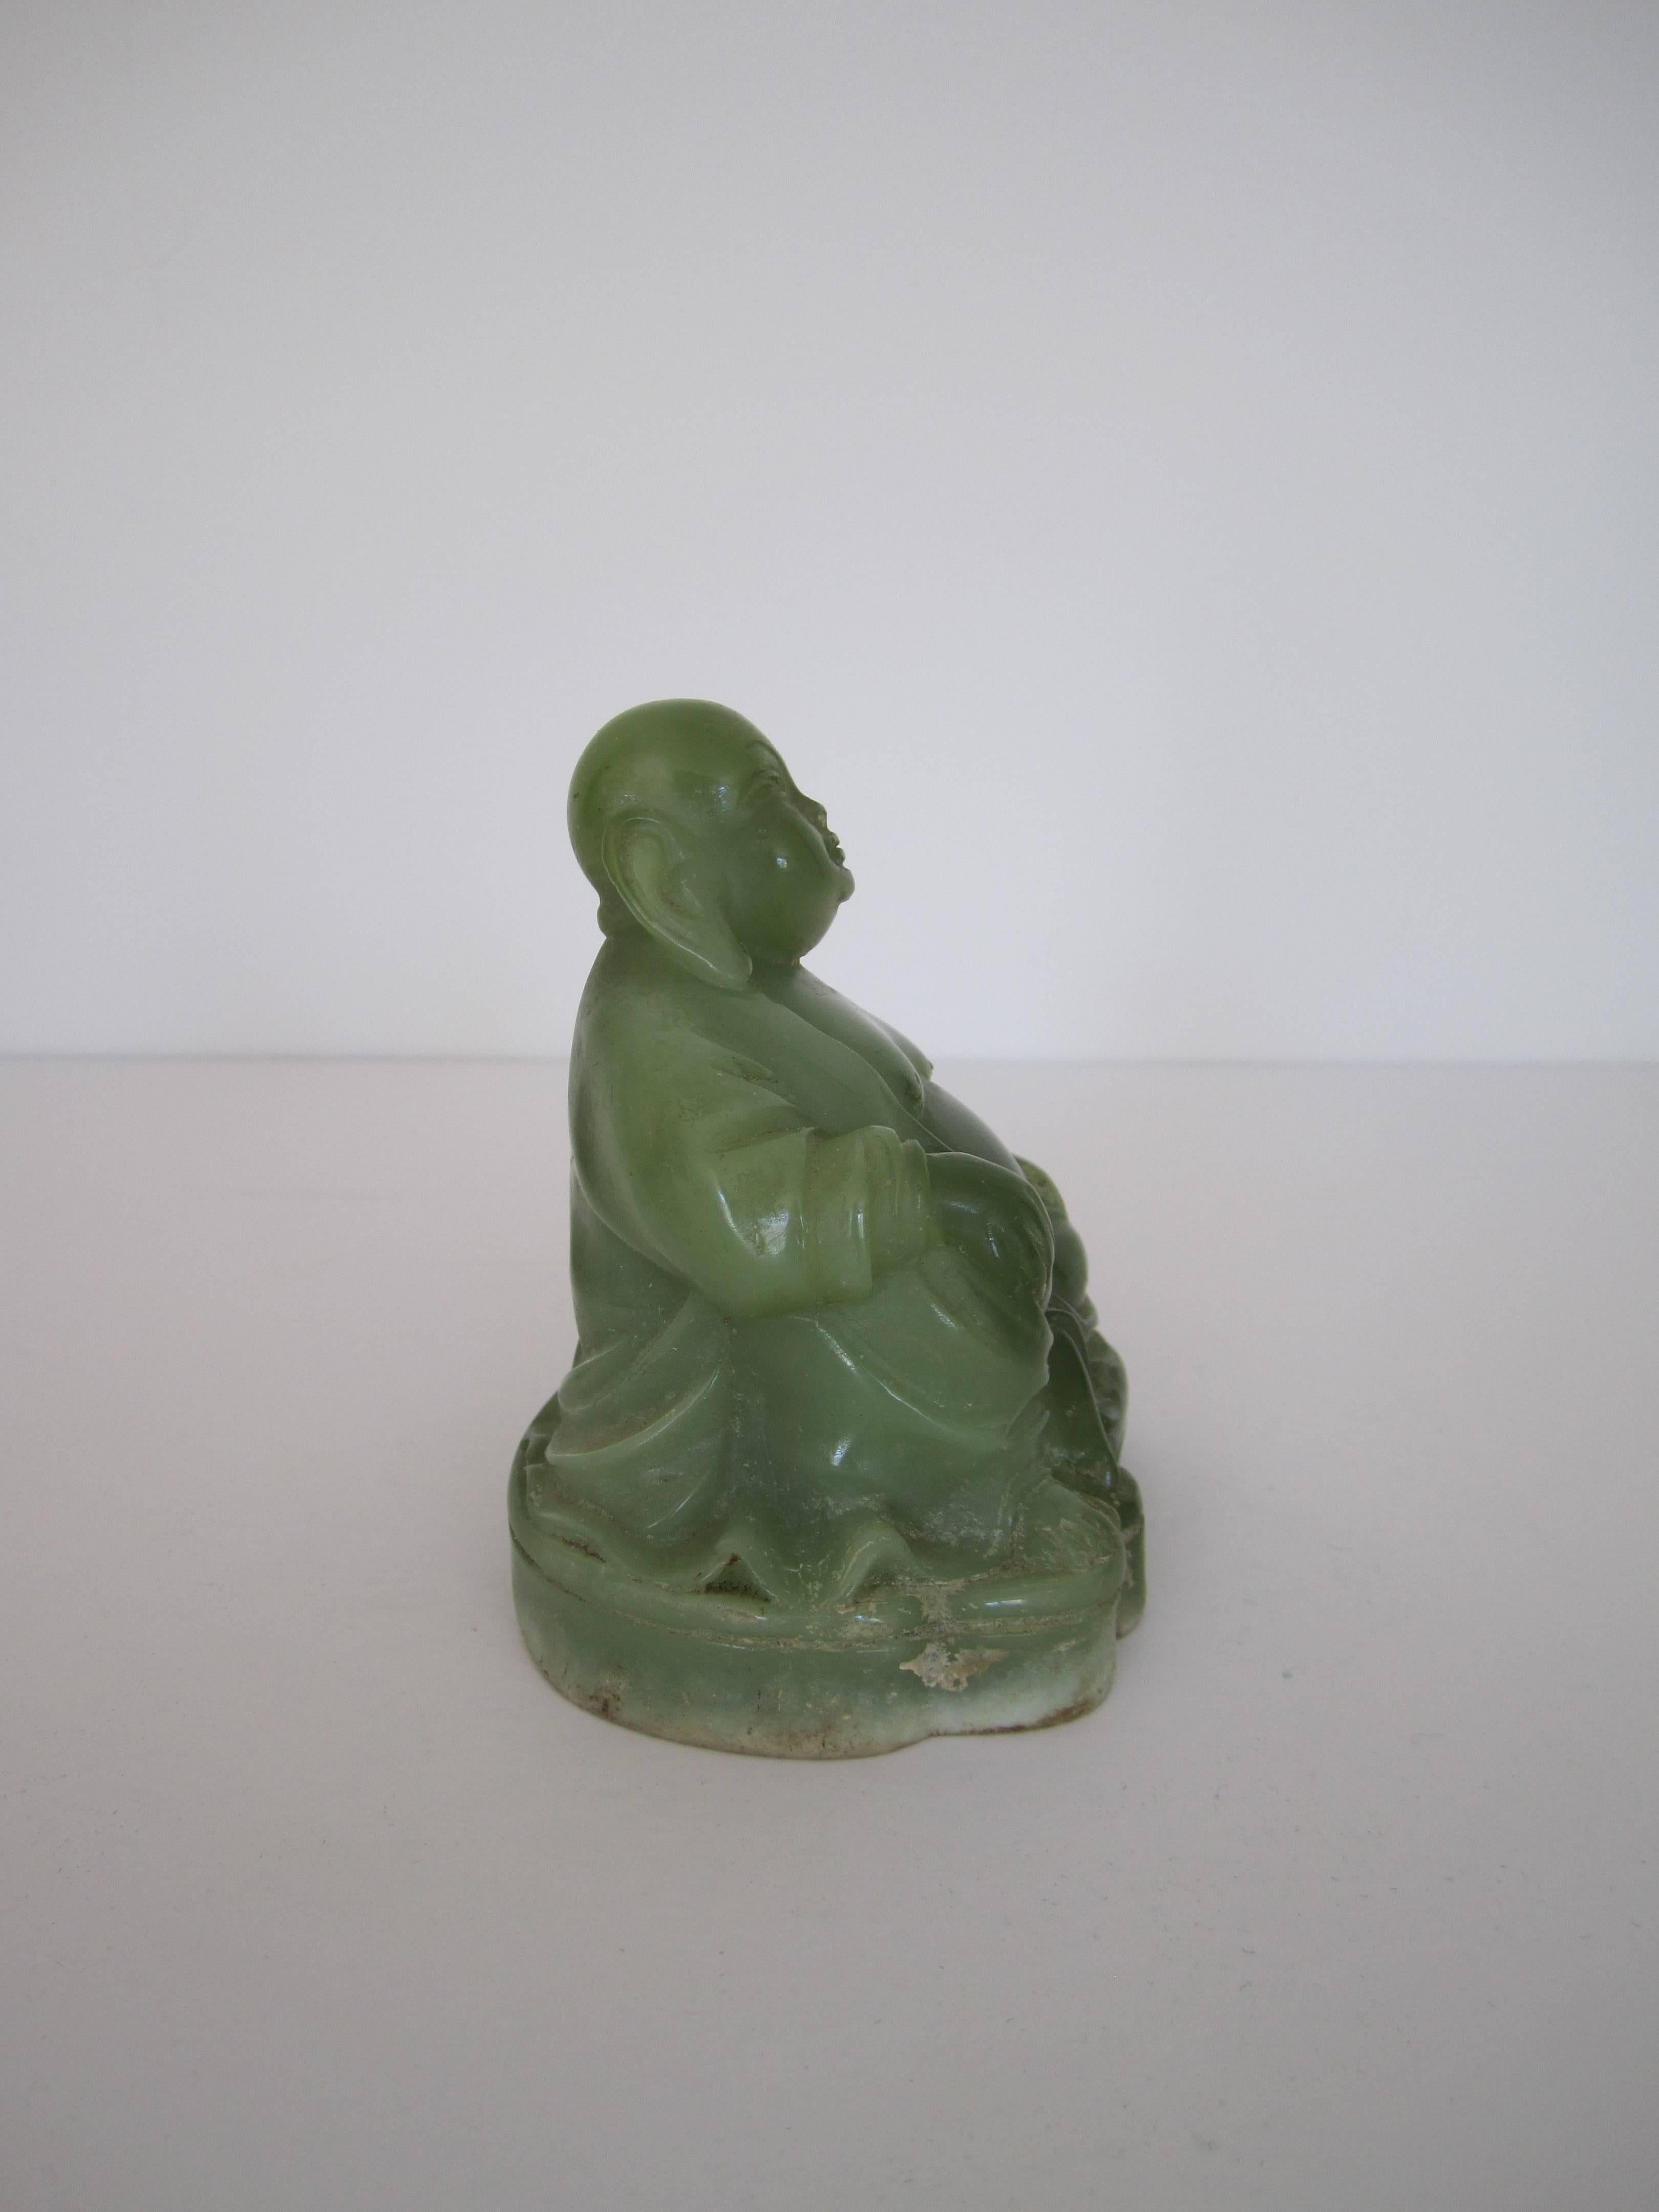 Molded Vintage Jade Green Resin Seated Buddha Sculpture